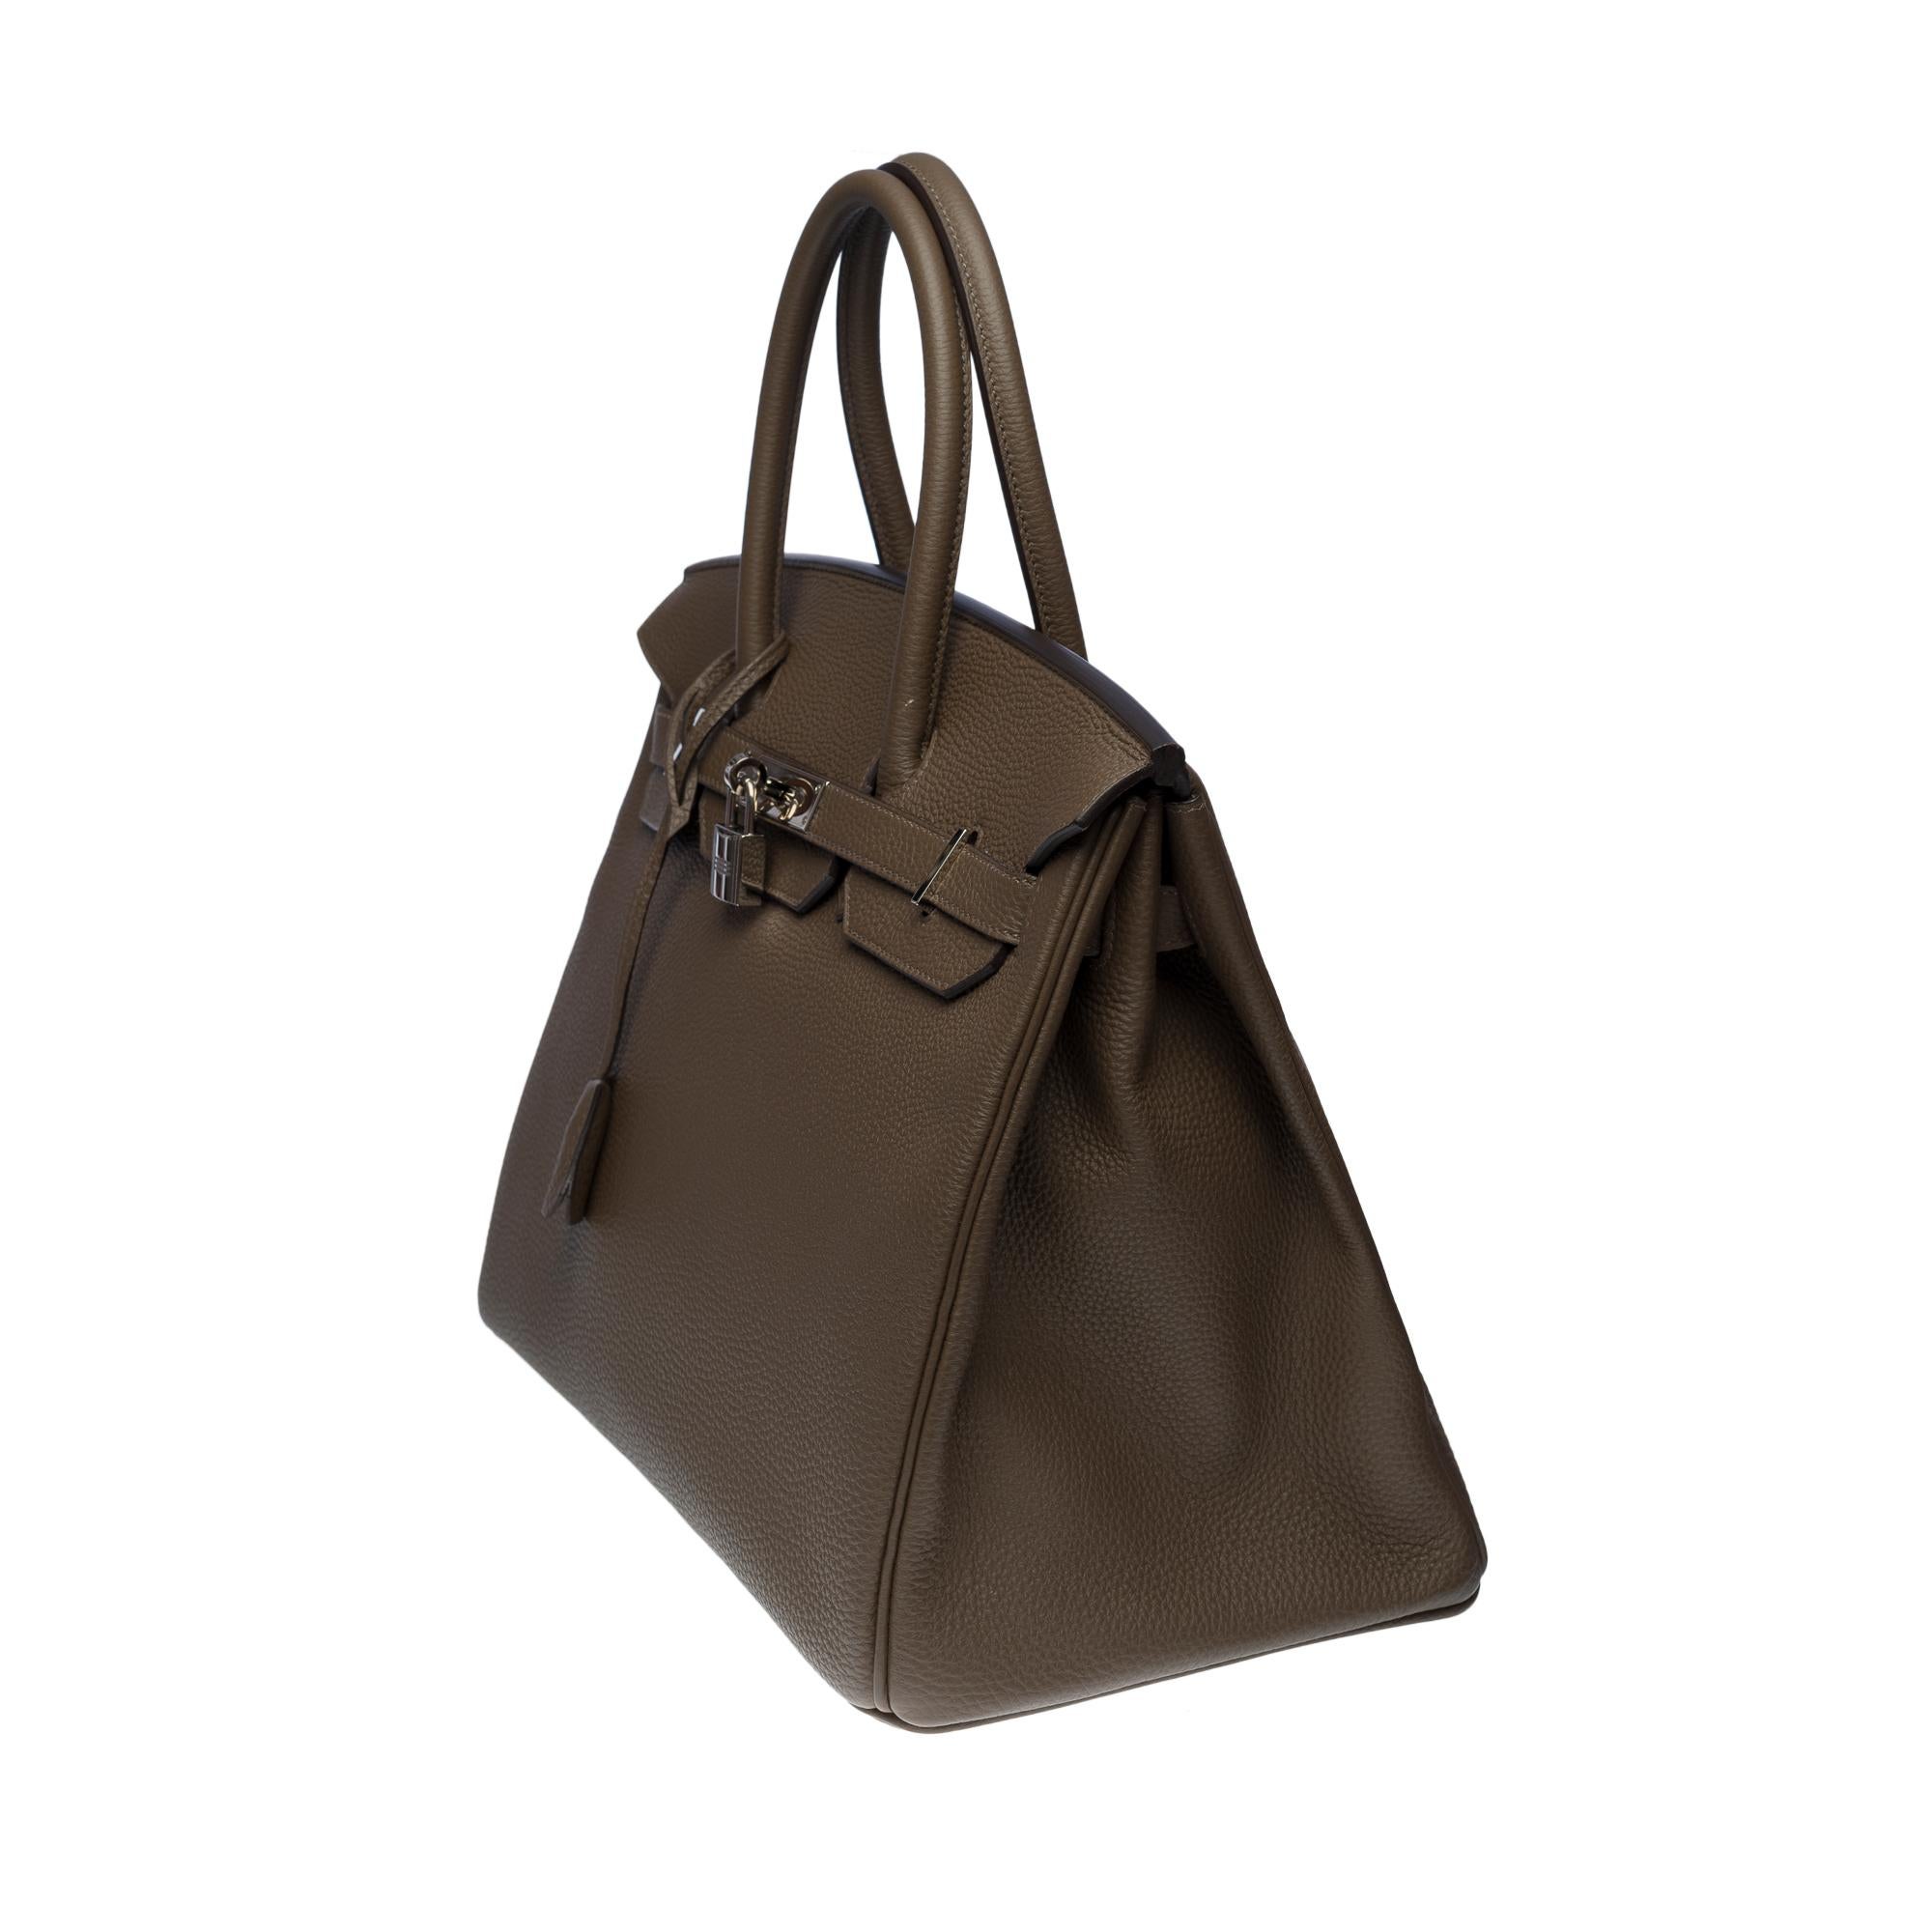 Women's or Men's Magnificent Hermès Birkin 35 handbag in Gris Elephant Togo leather, SHW